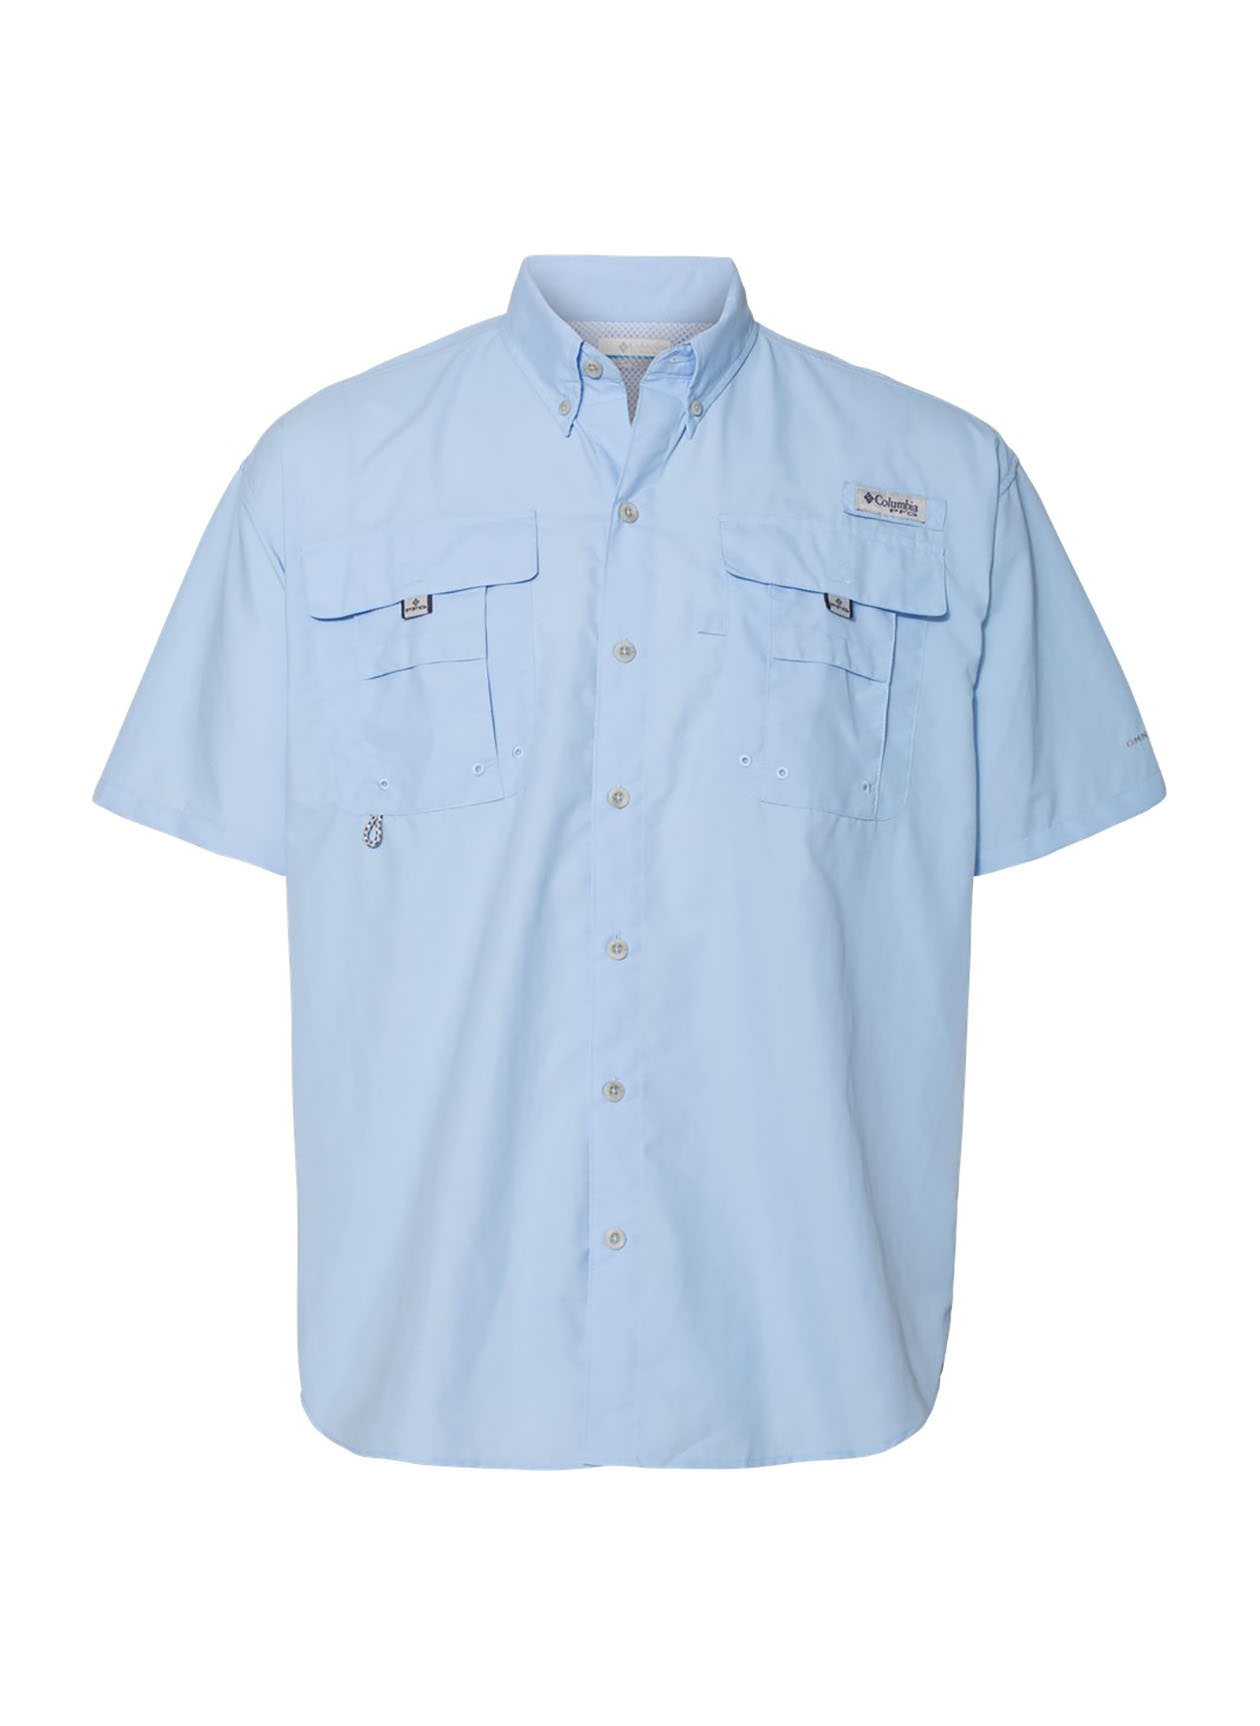 Printed Columbia Men's Sail PFG Bahama II Short-Sleeve Shirt